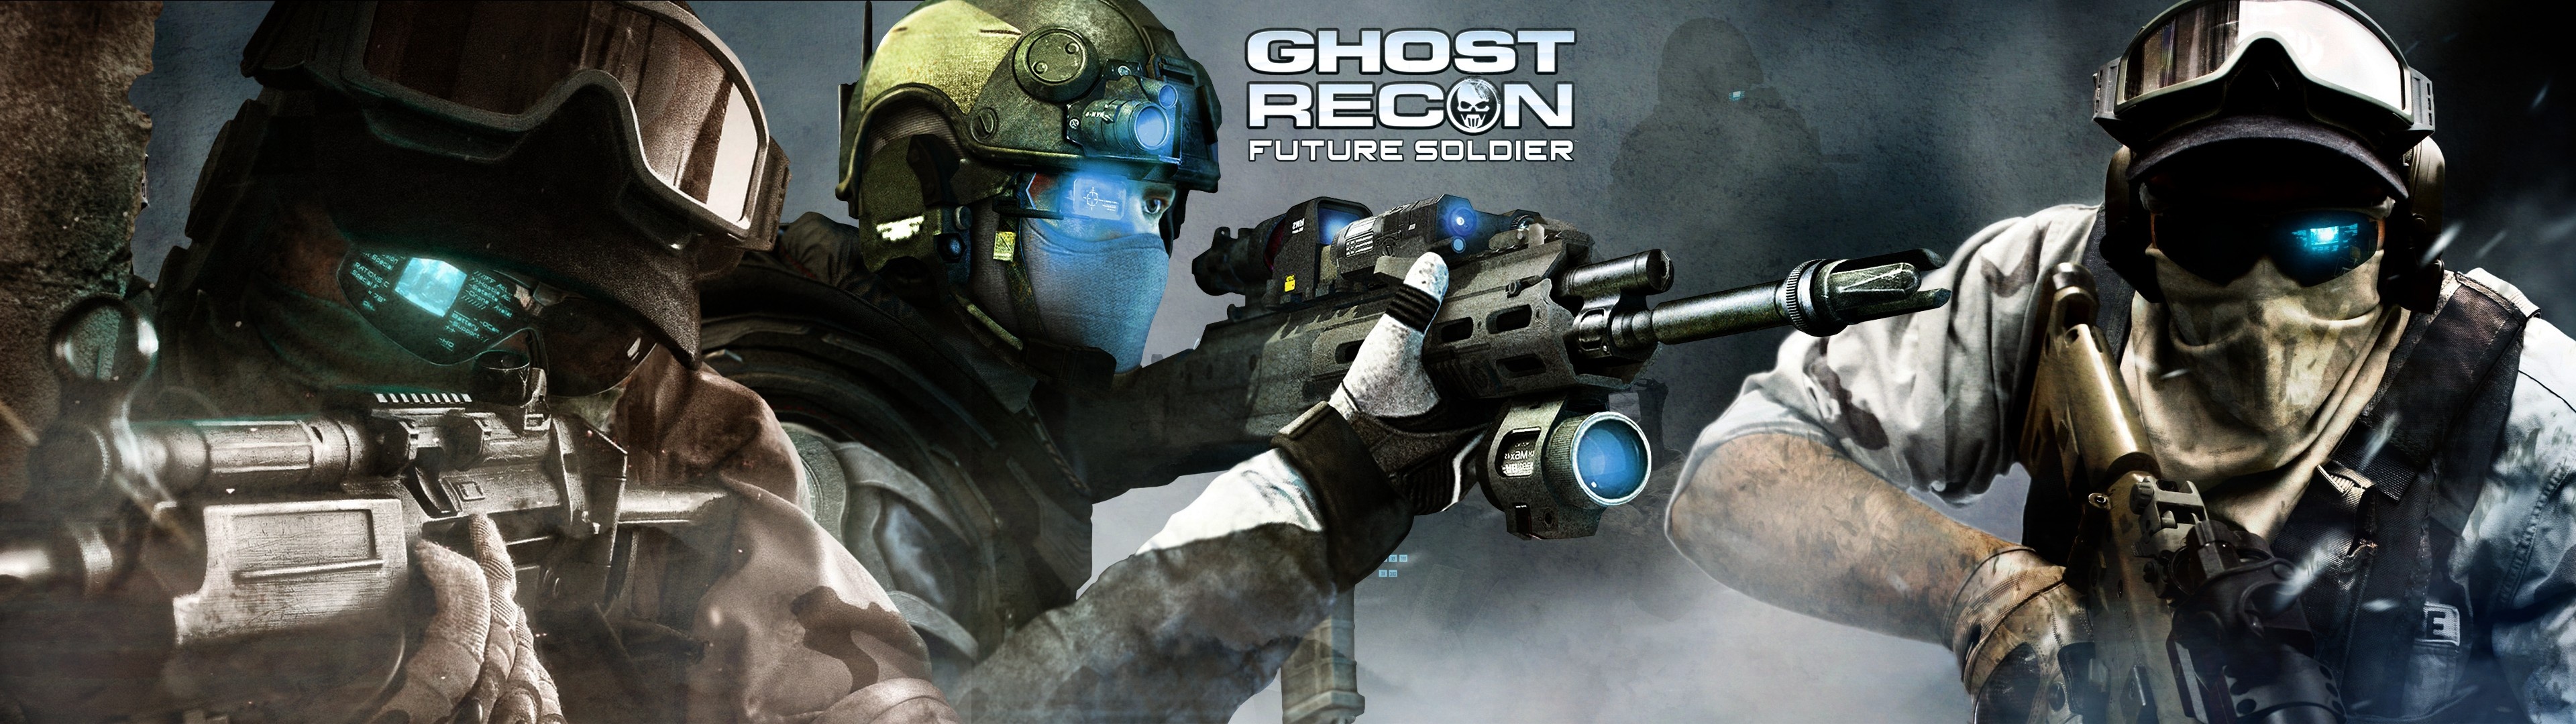 Assault rifle, Ghost Recon, Tactical video games, Smoke effect, 3840x1080 Dual Screen Desktop